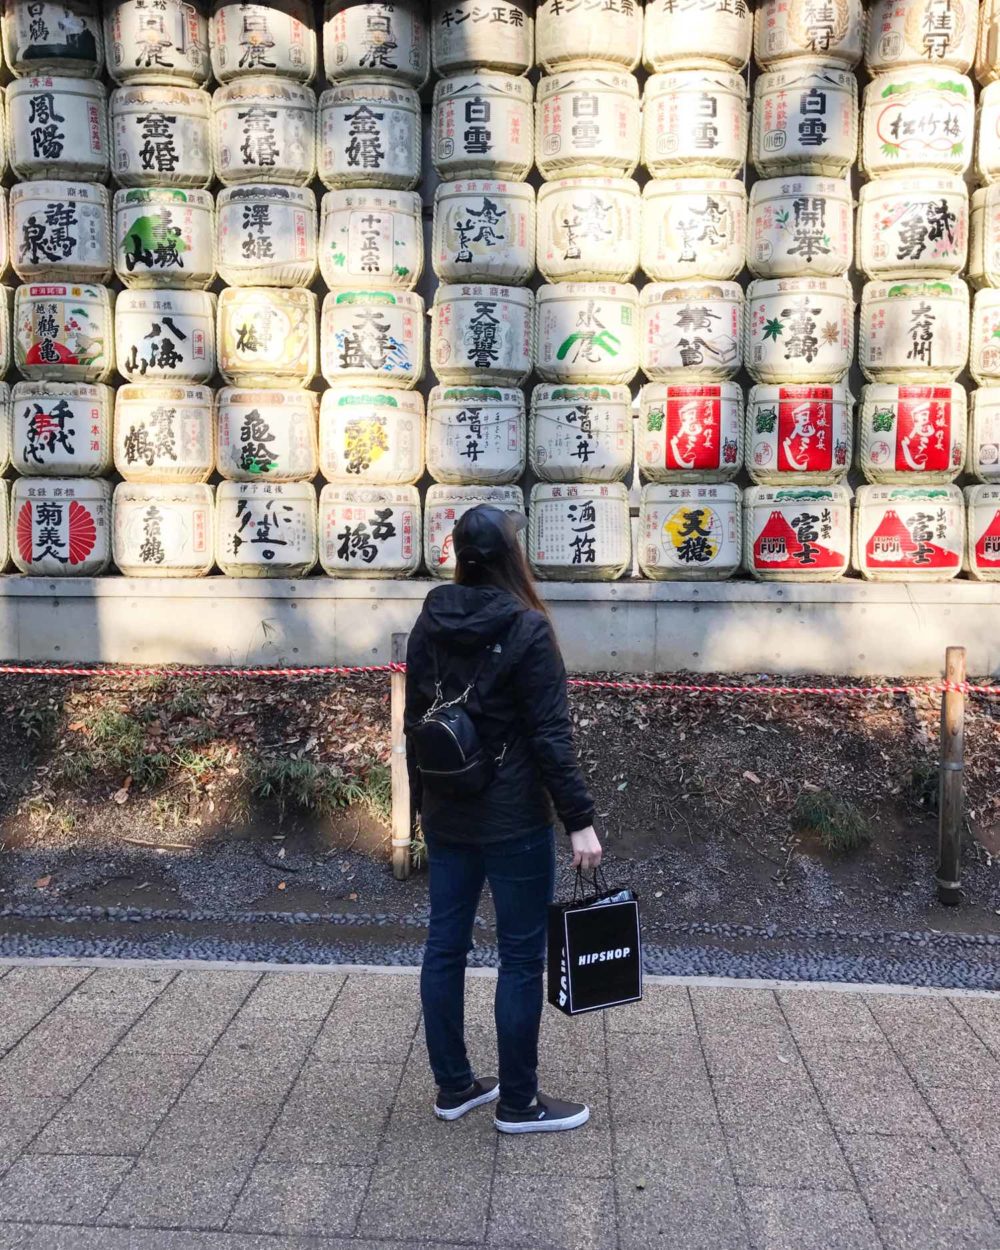 sake barrels at meiji shrine in tokyo japan